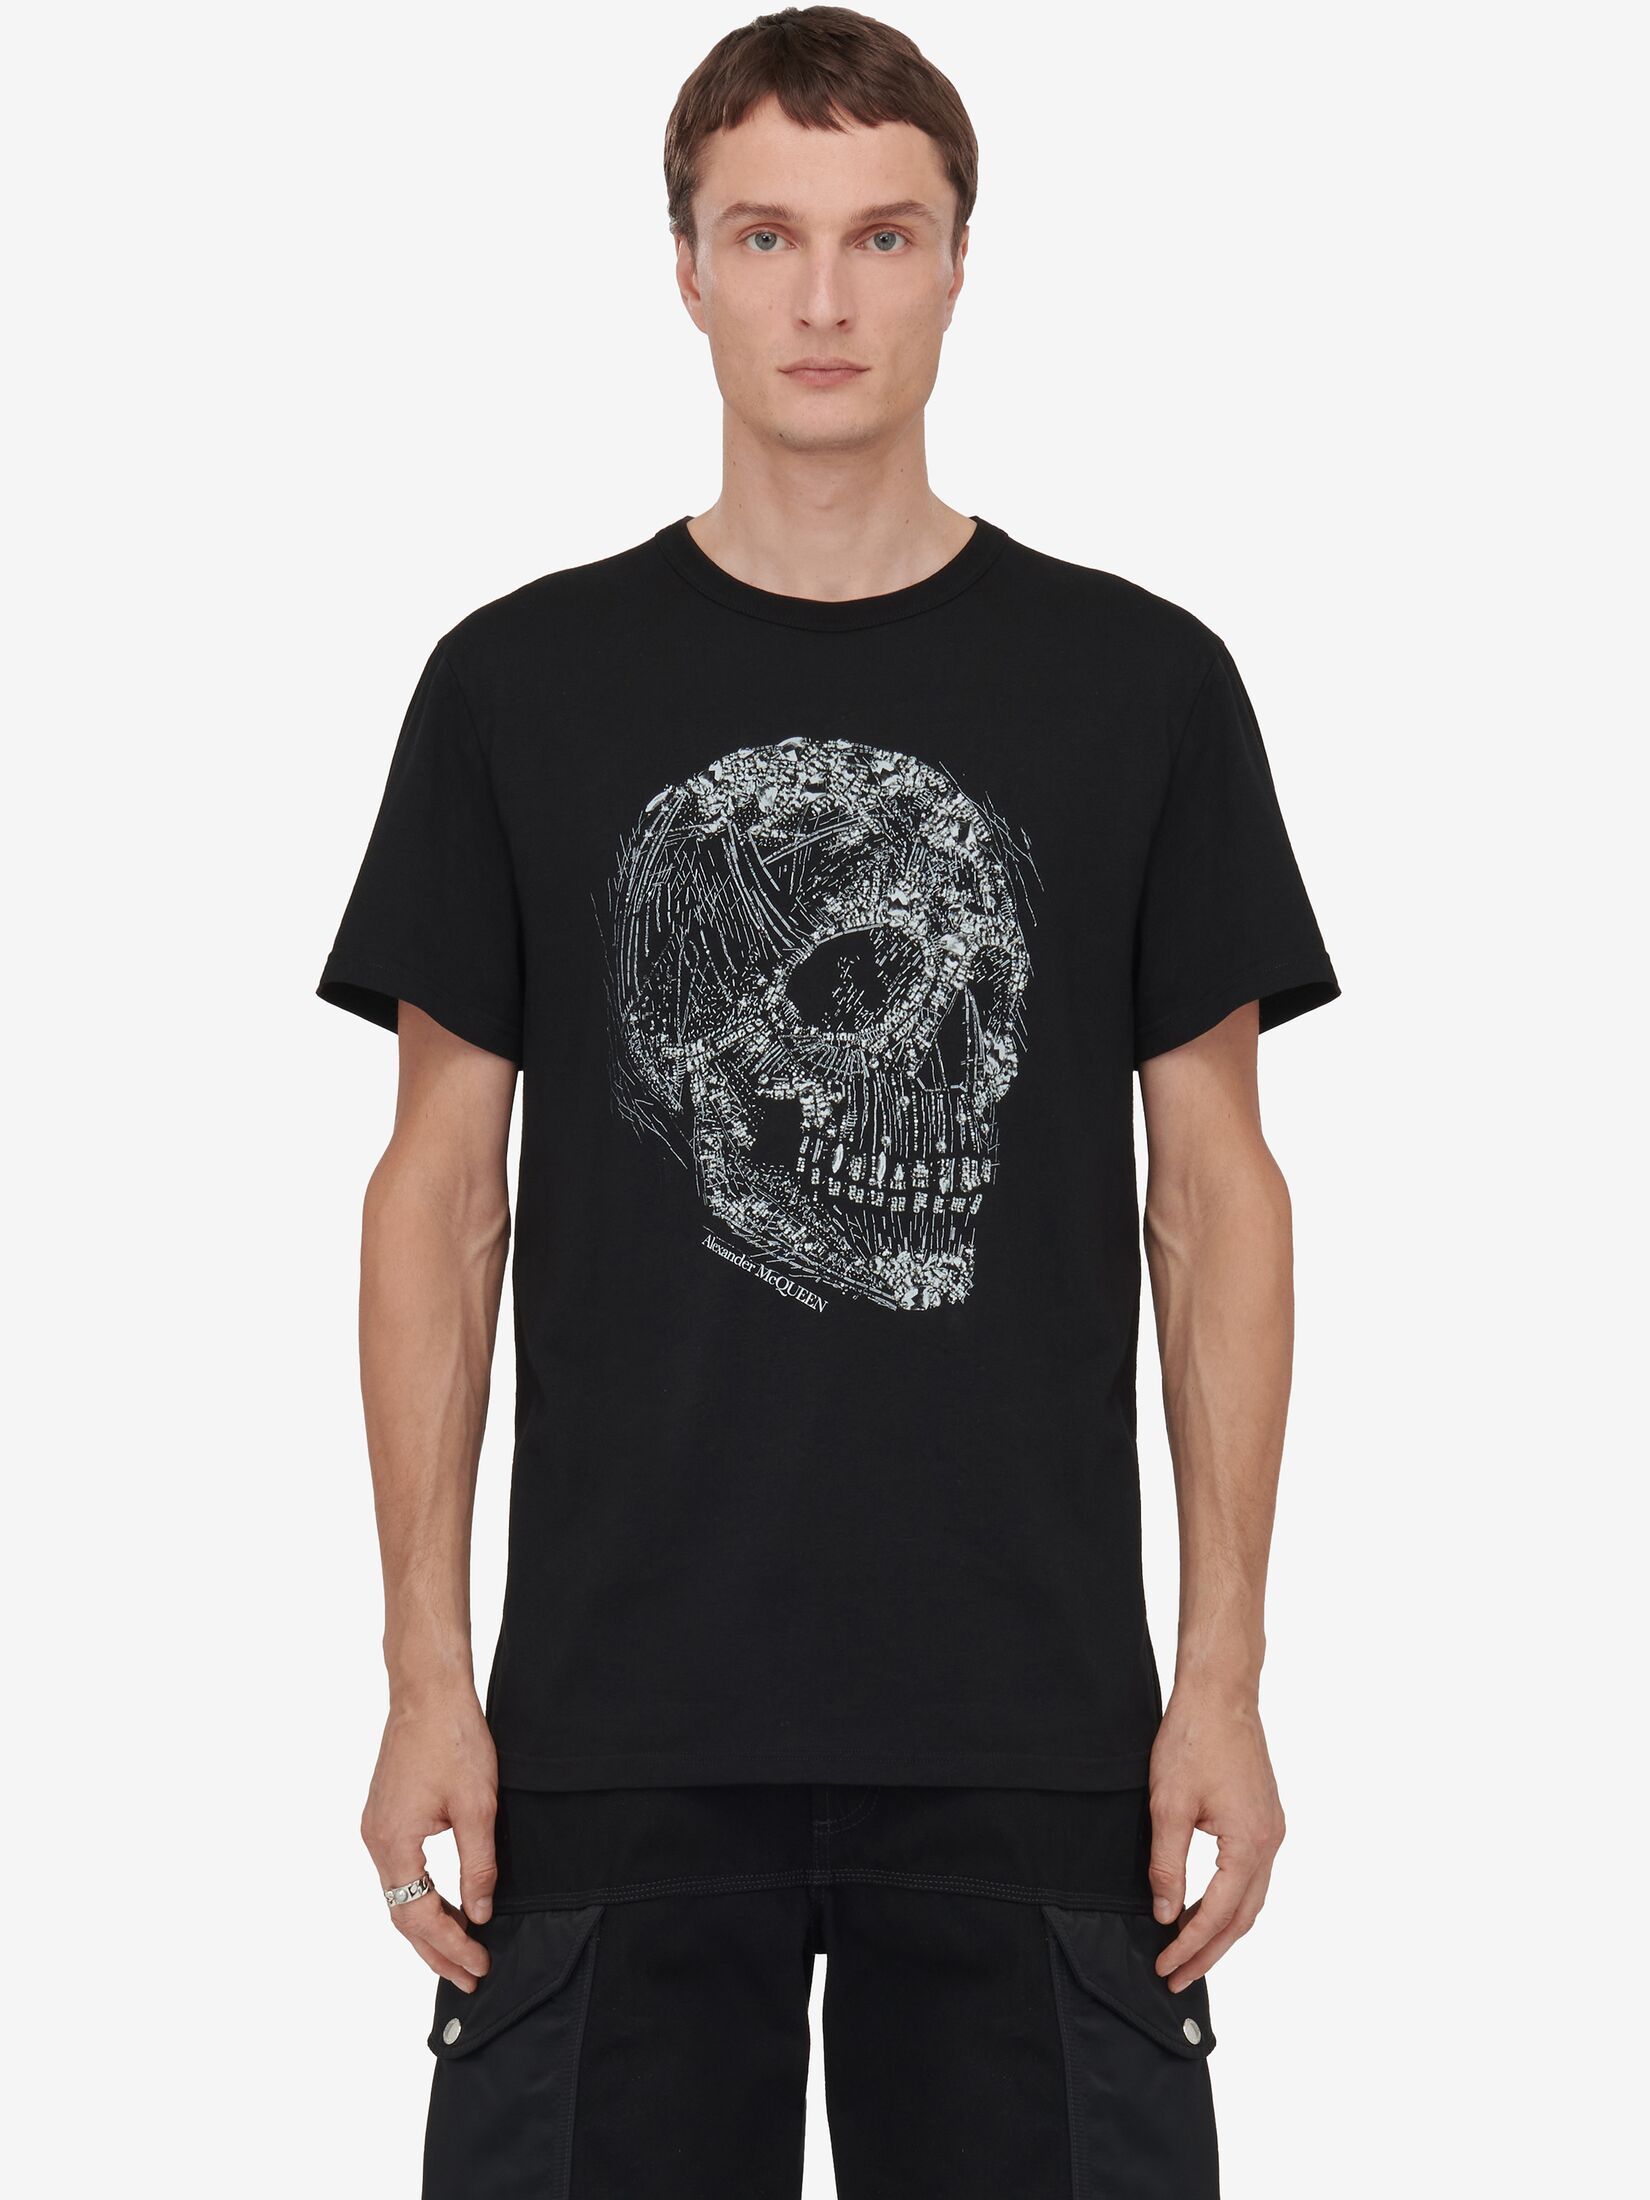 Crystal T-shirt Black/White US Alexander McQueen Skull | in